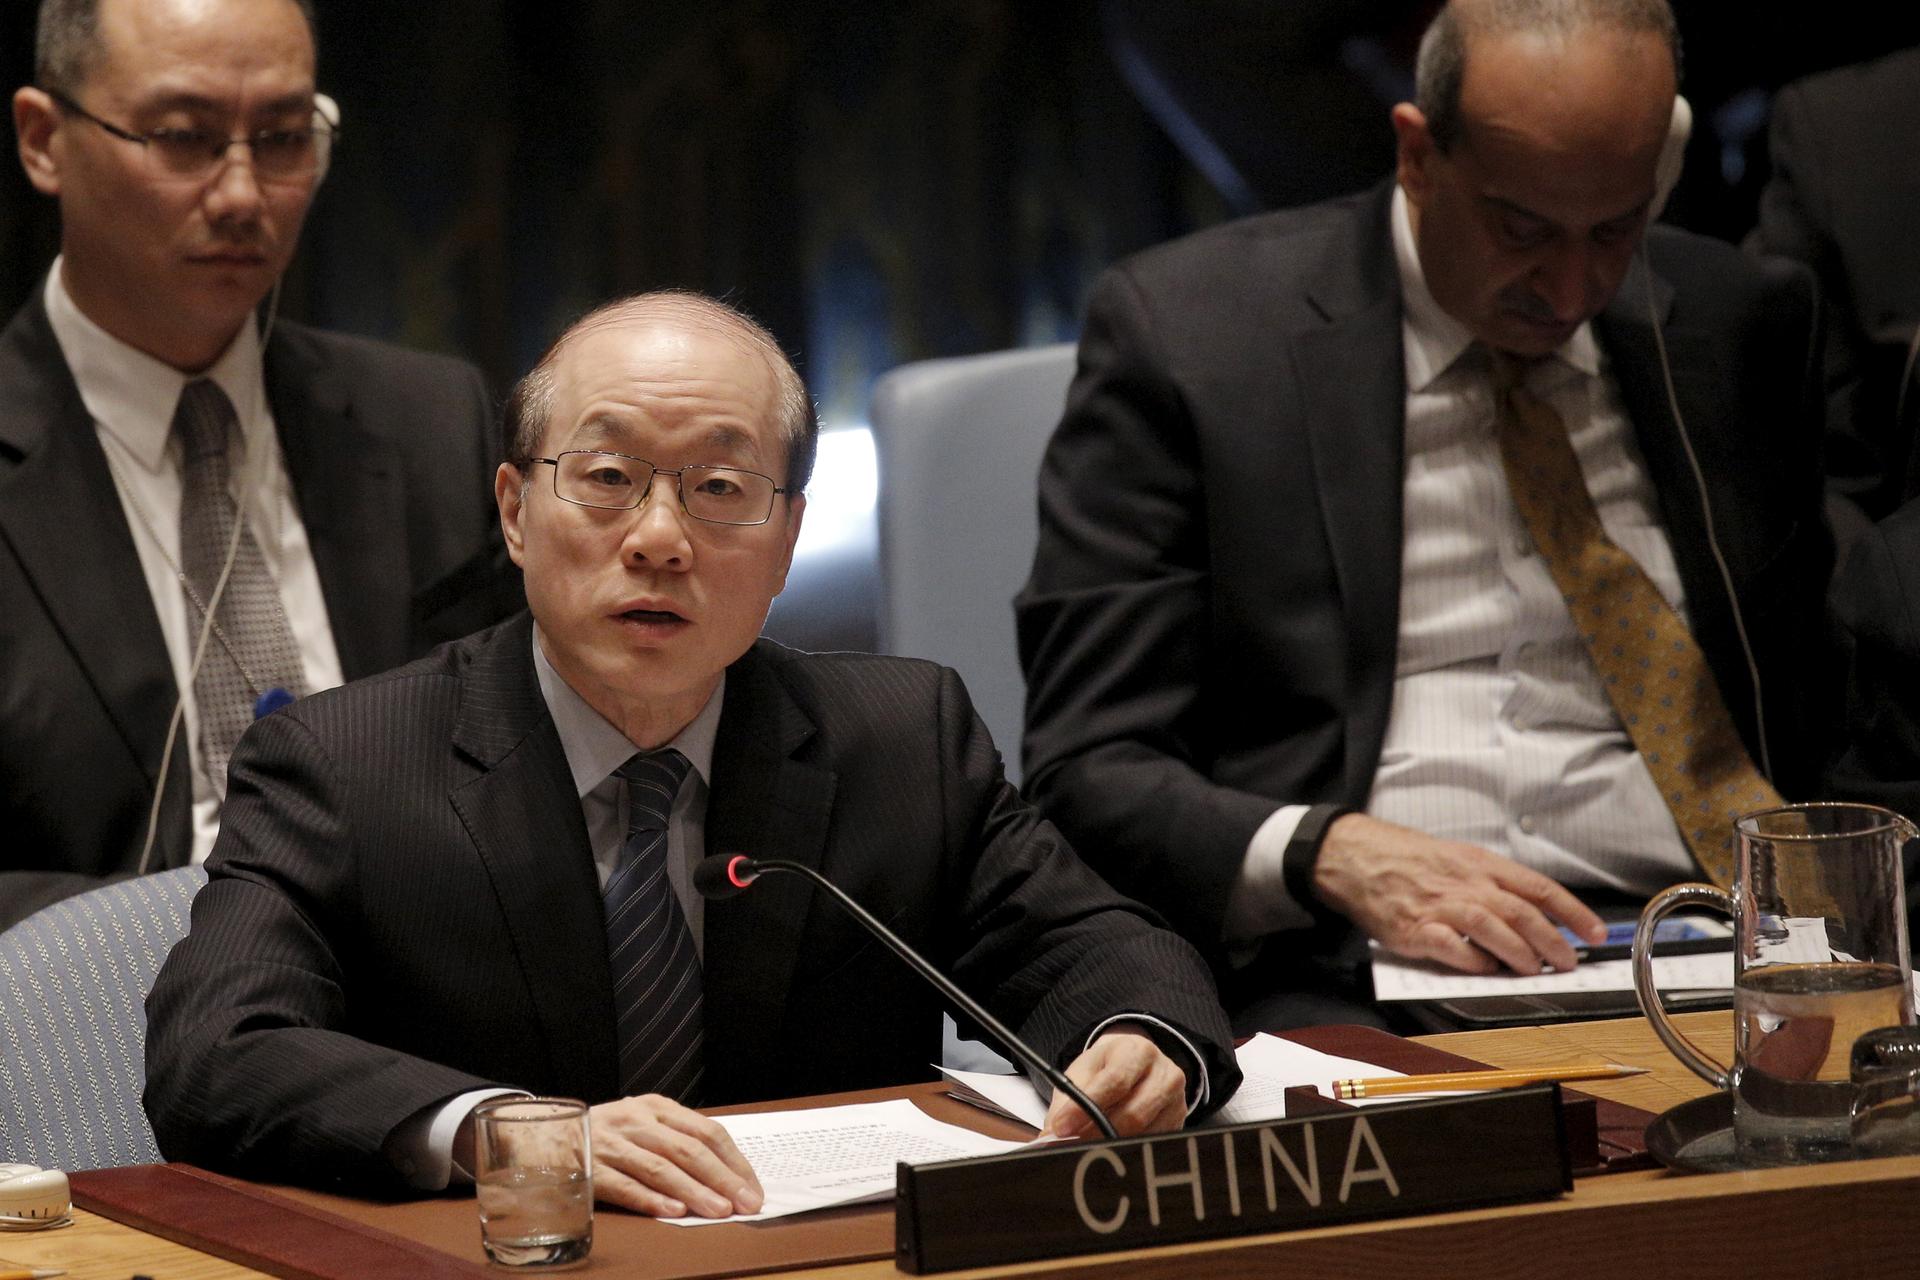 Chinese ambassador Liu Jieyi addresses the United Nations Security Council